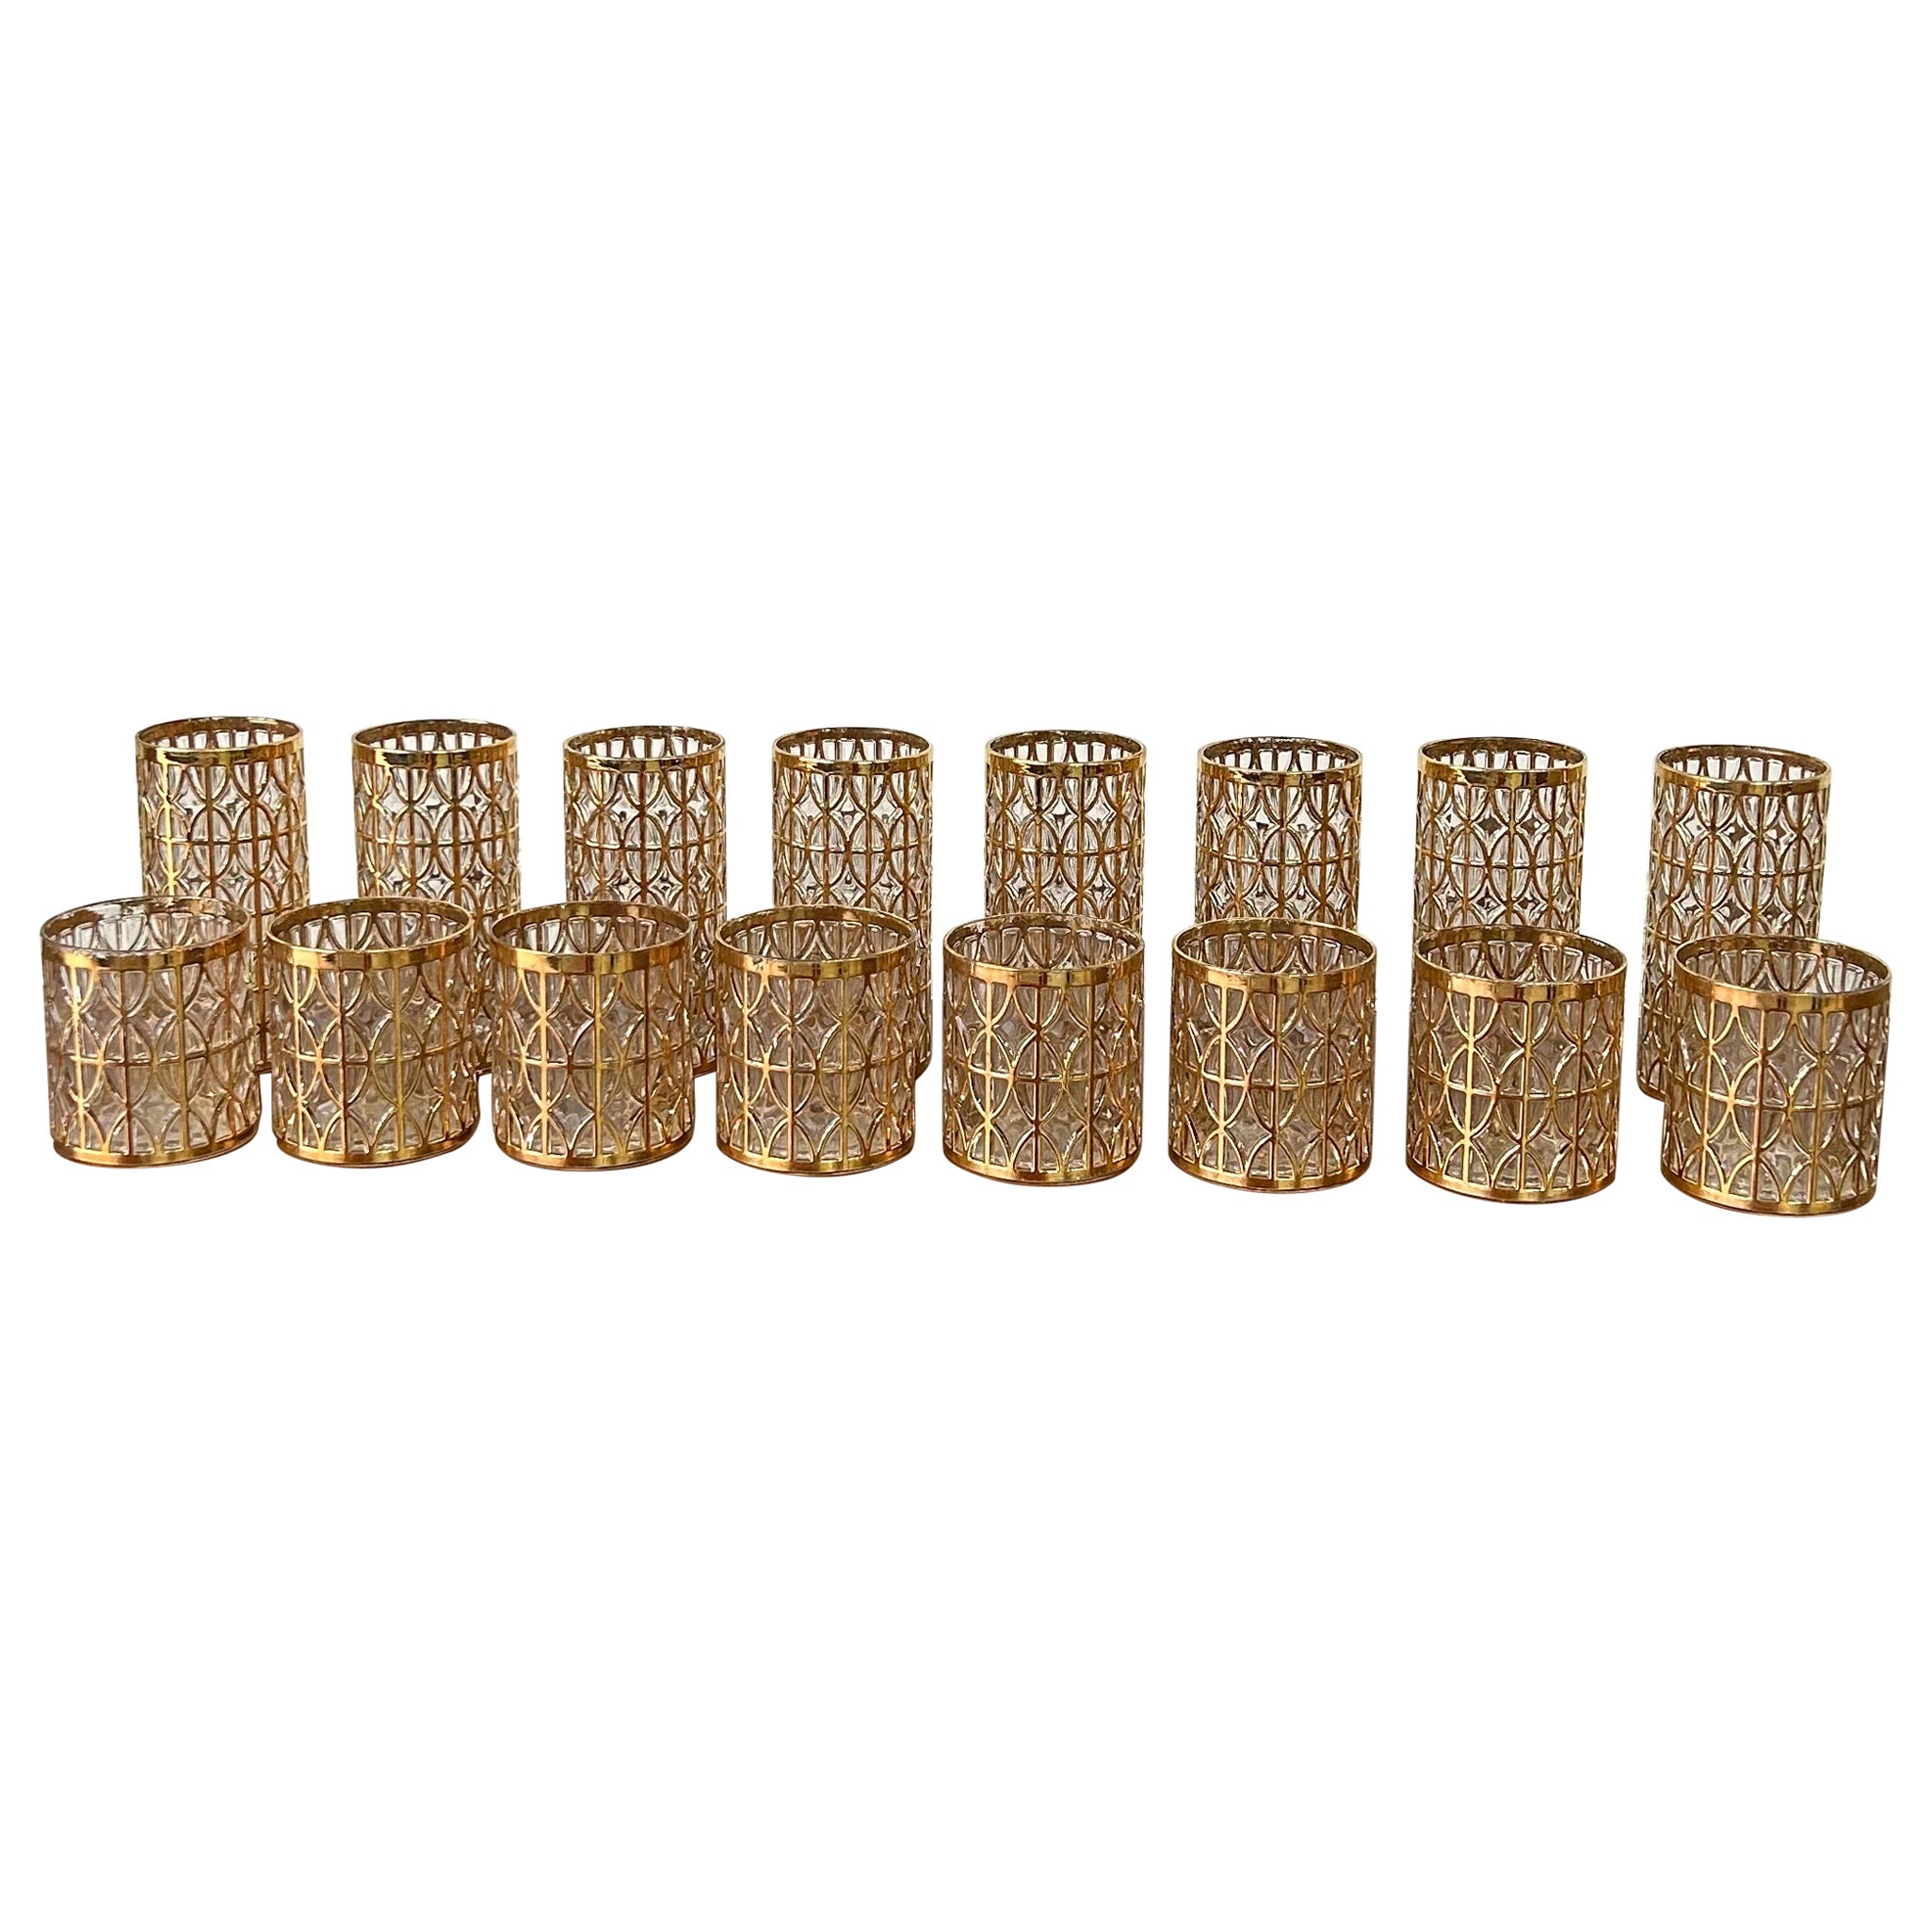 22k Gold Imperial Shoji Glassware Barware set of 16 1960s Hollywood Regency For Sale